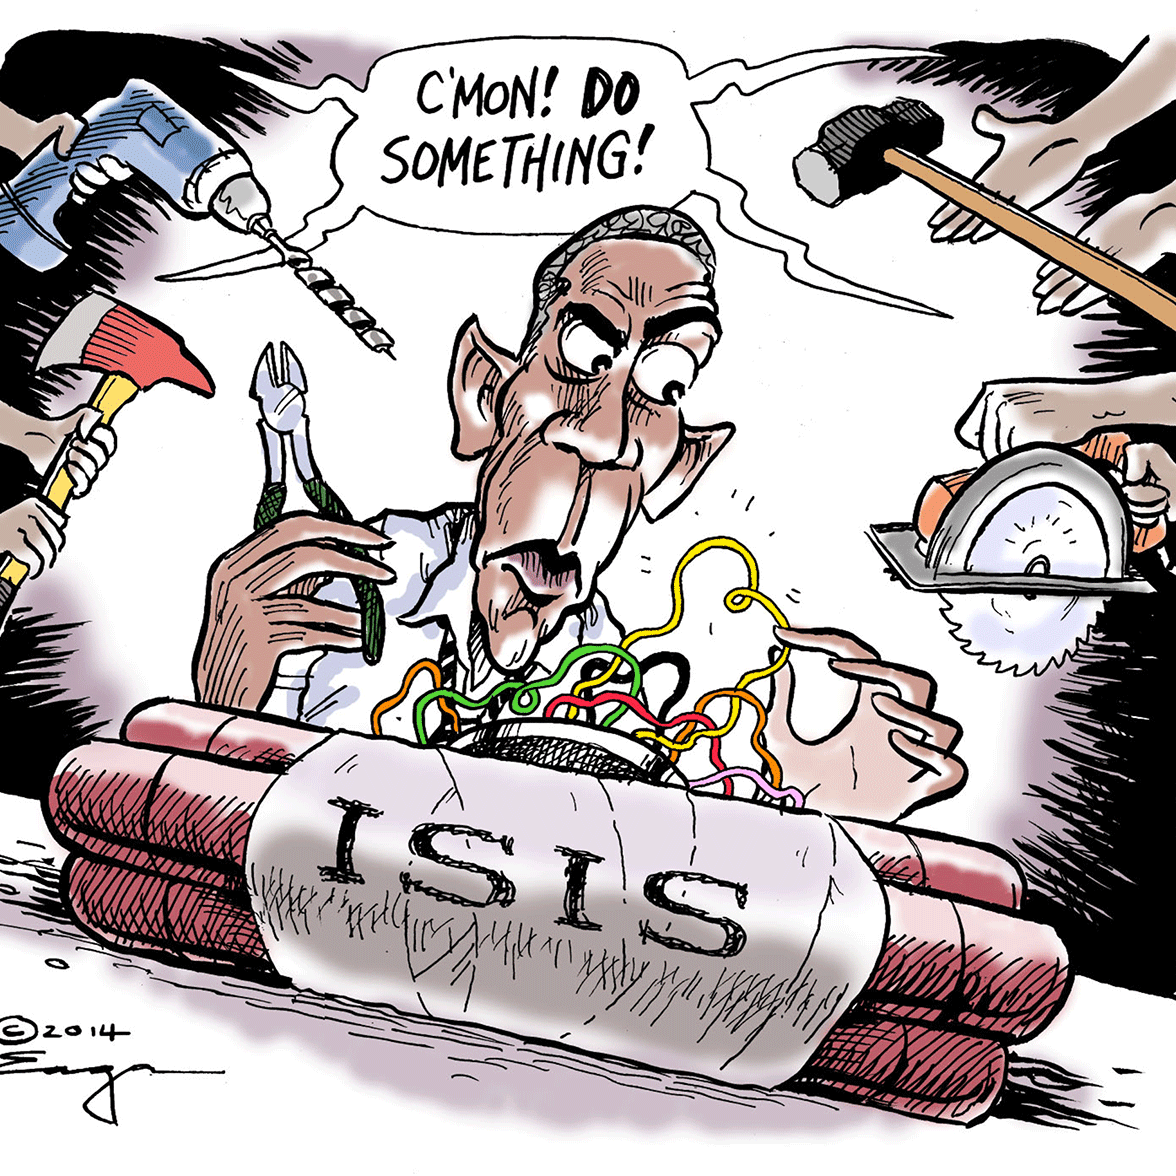 Cartoon of Barack Obama diffusing a bomb labeled 'ISIS' while people holding indelicate tools say 'Cmon! do something!'